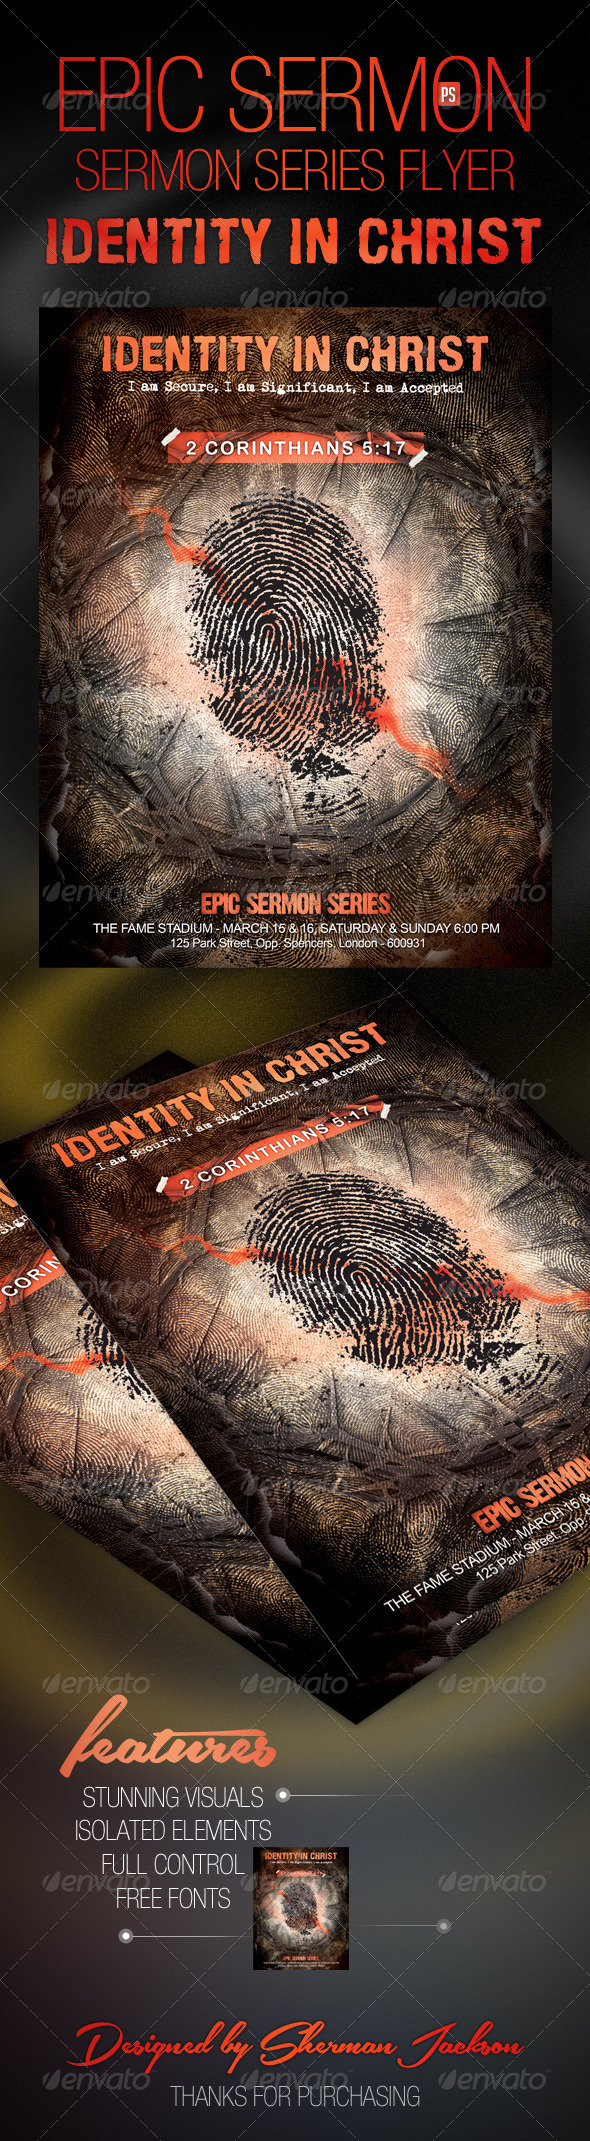 Epic Sermon Series Flyer - Identity in Christ